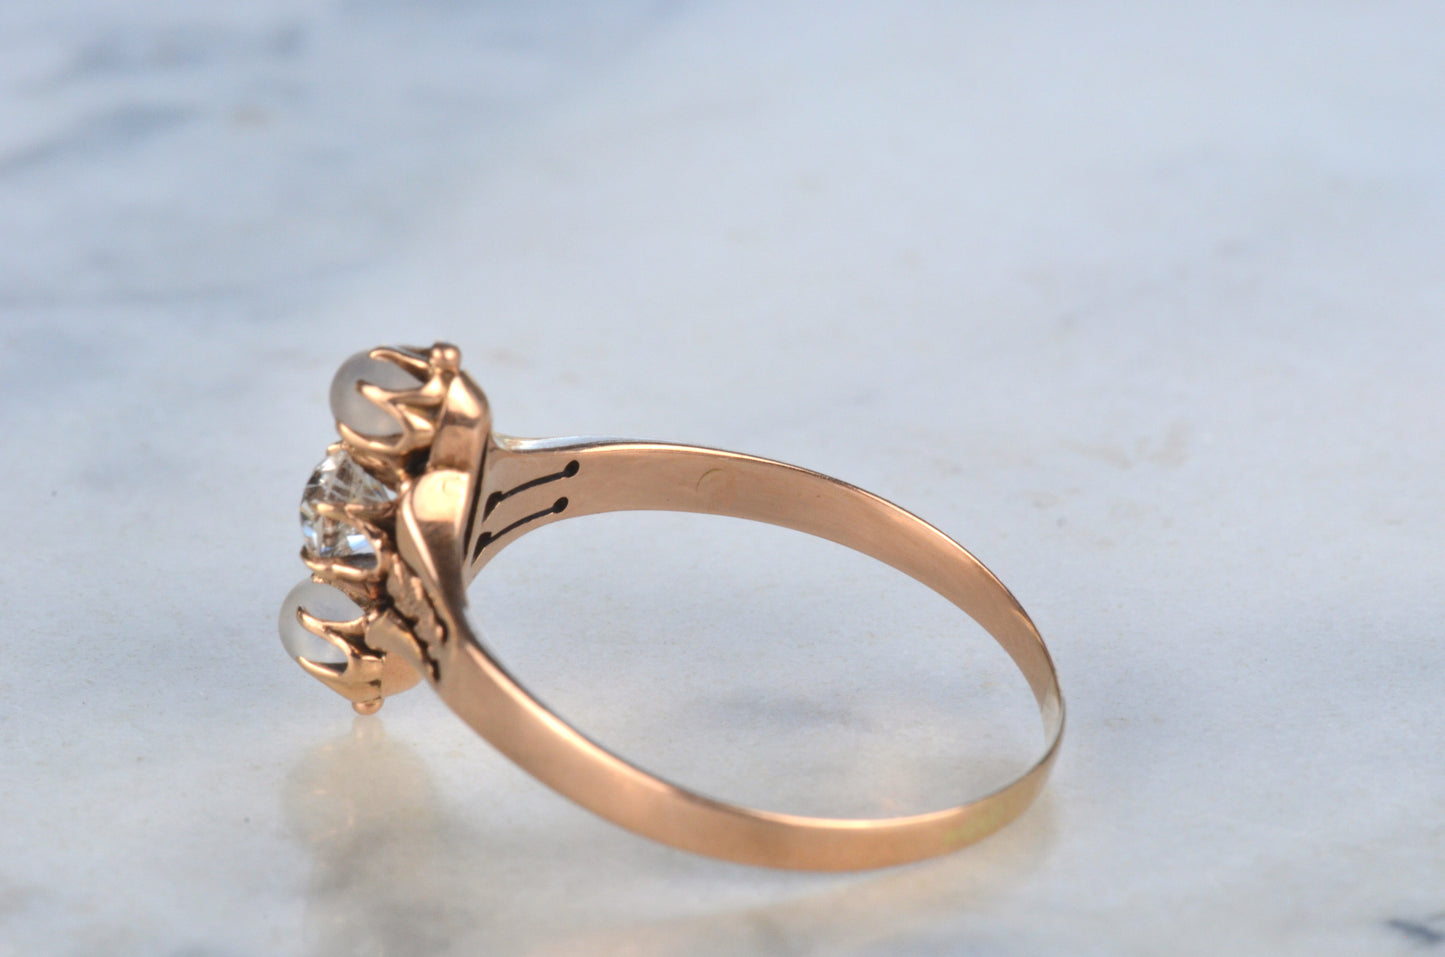 Enchanting Victorian Moonstone and Diamond Ring